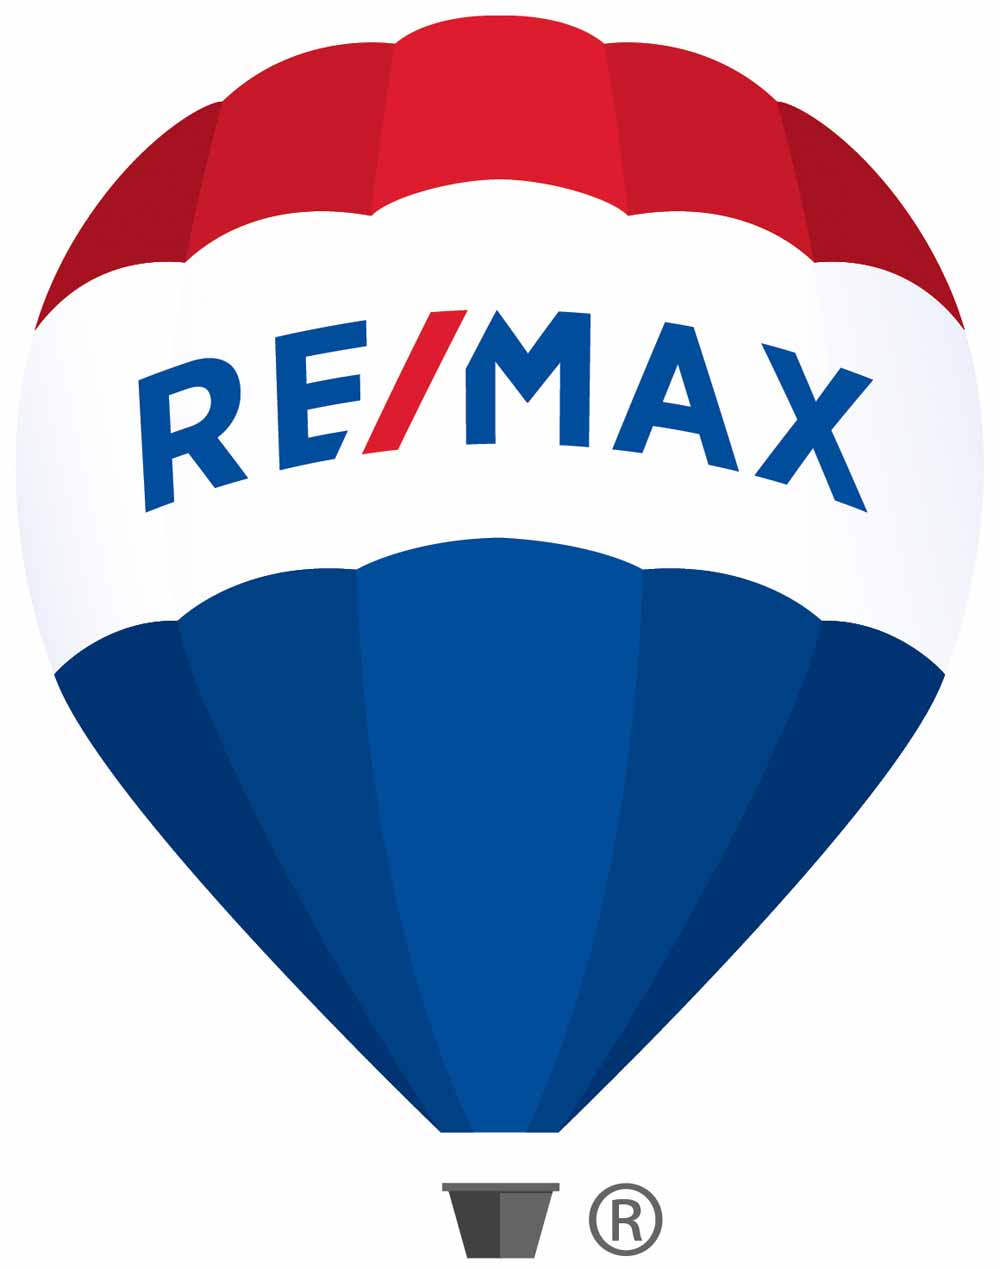 REMAX_Balloon.jpg